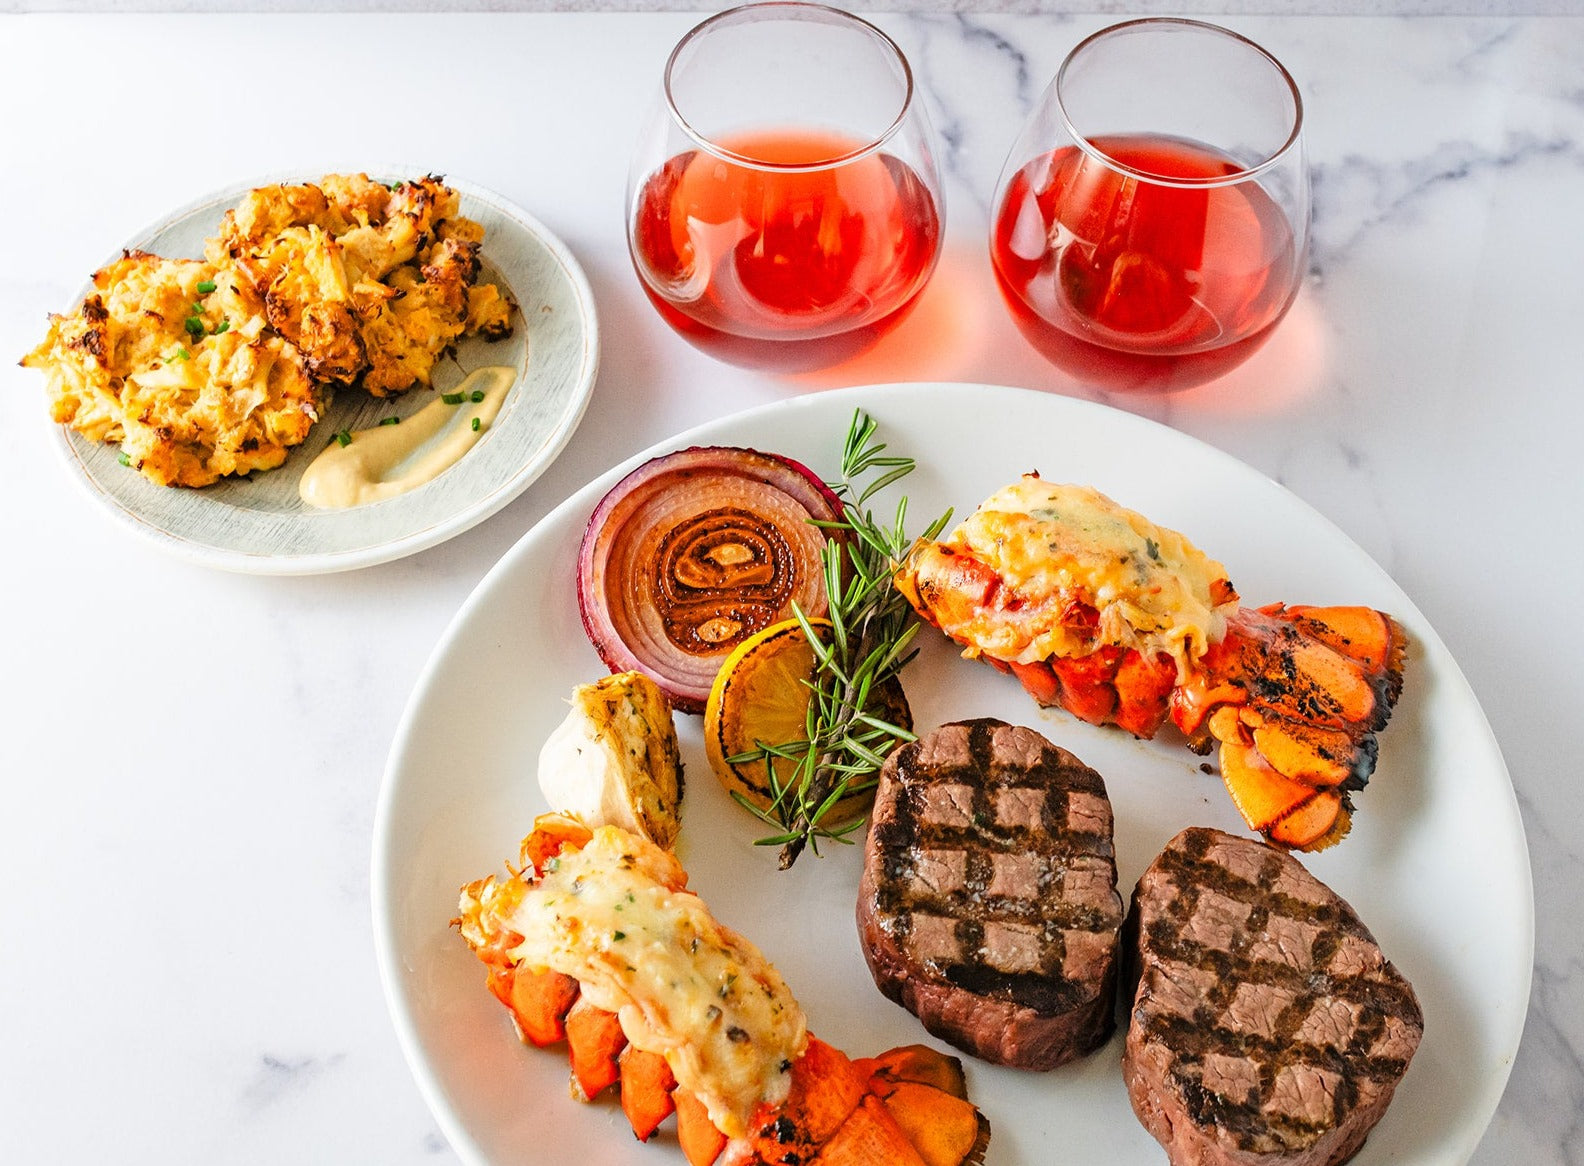 steak and lobster dinner recipes